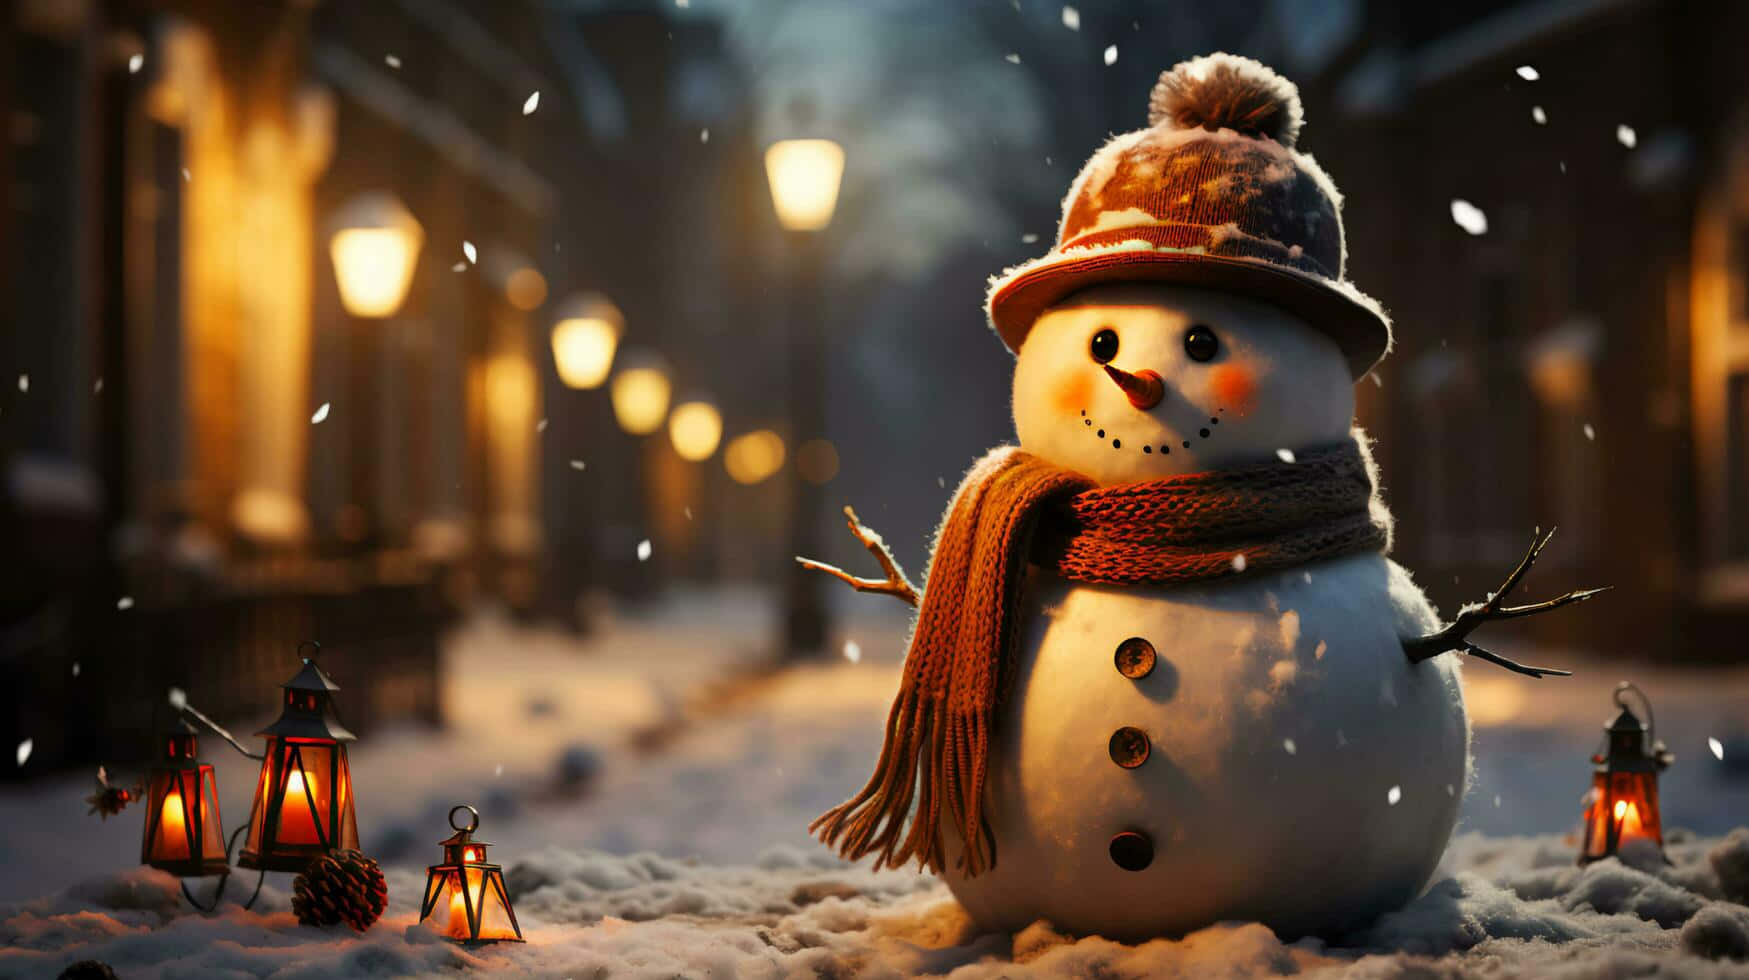 Charming Winter Snowman Scene Wallpaper